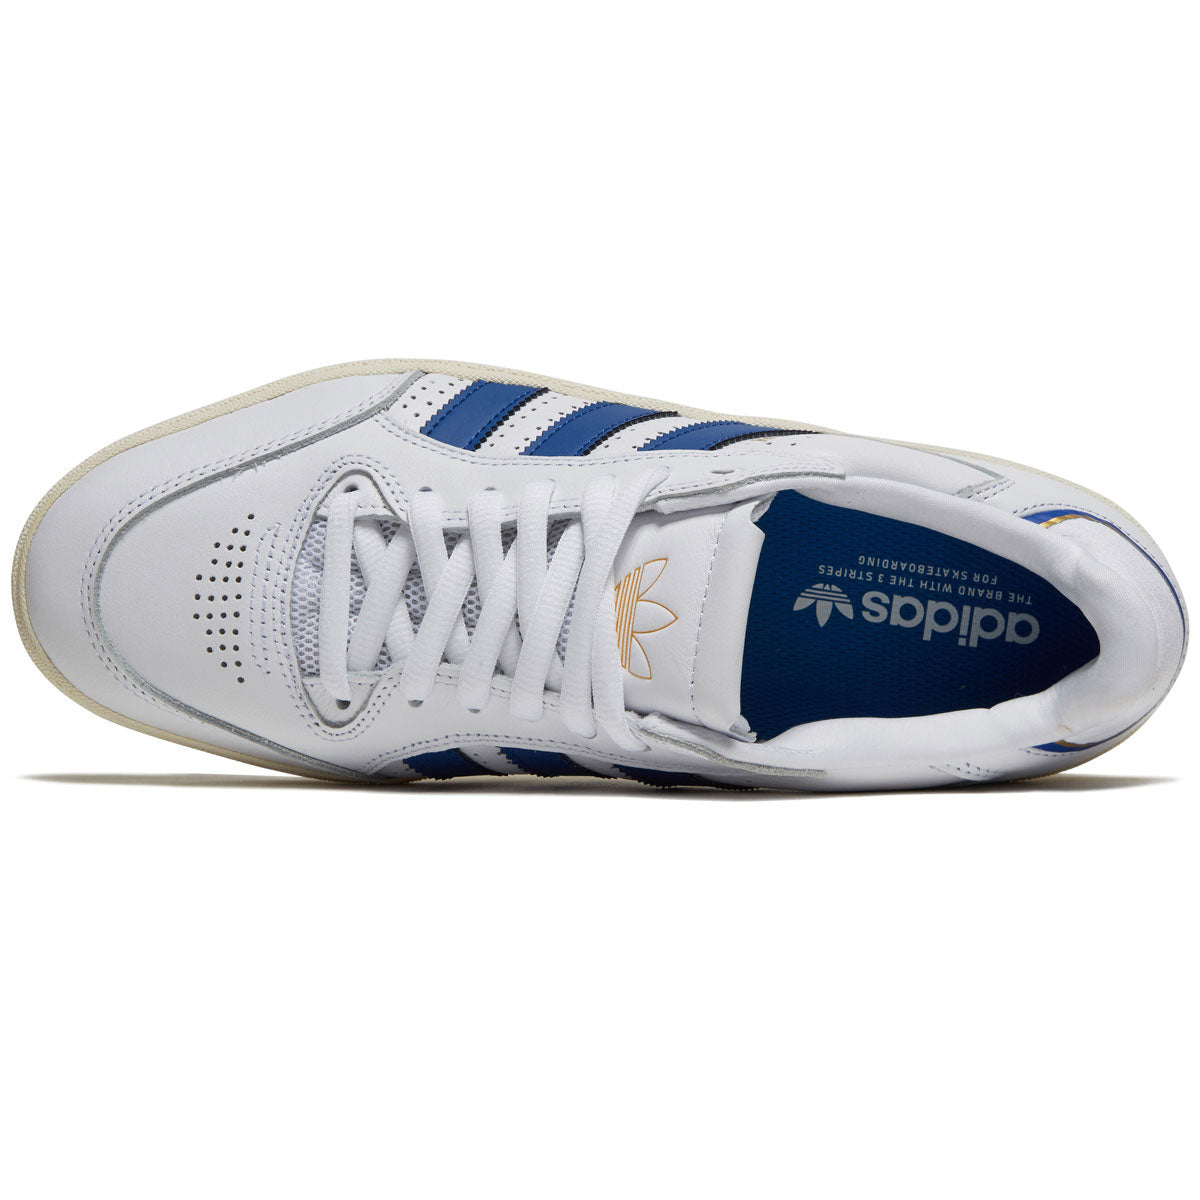 Adidas Tyshawn Low Shoes - White/Royal Blue/Chalk White image 3